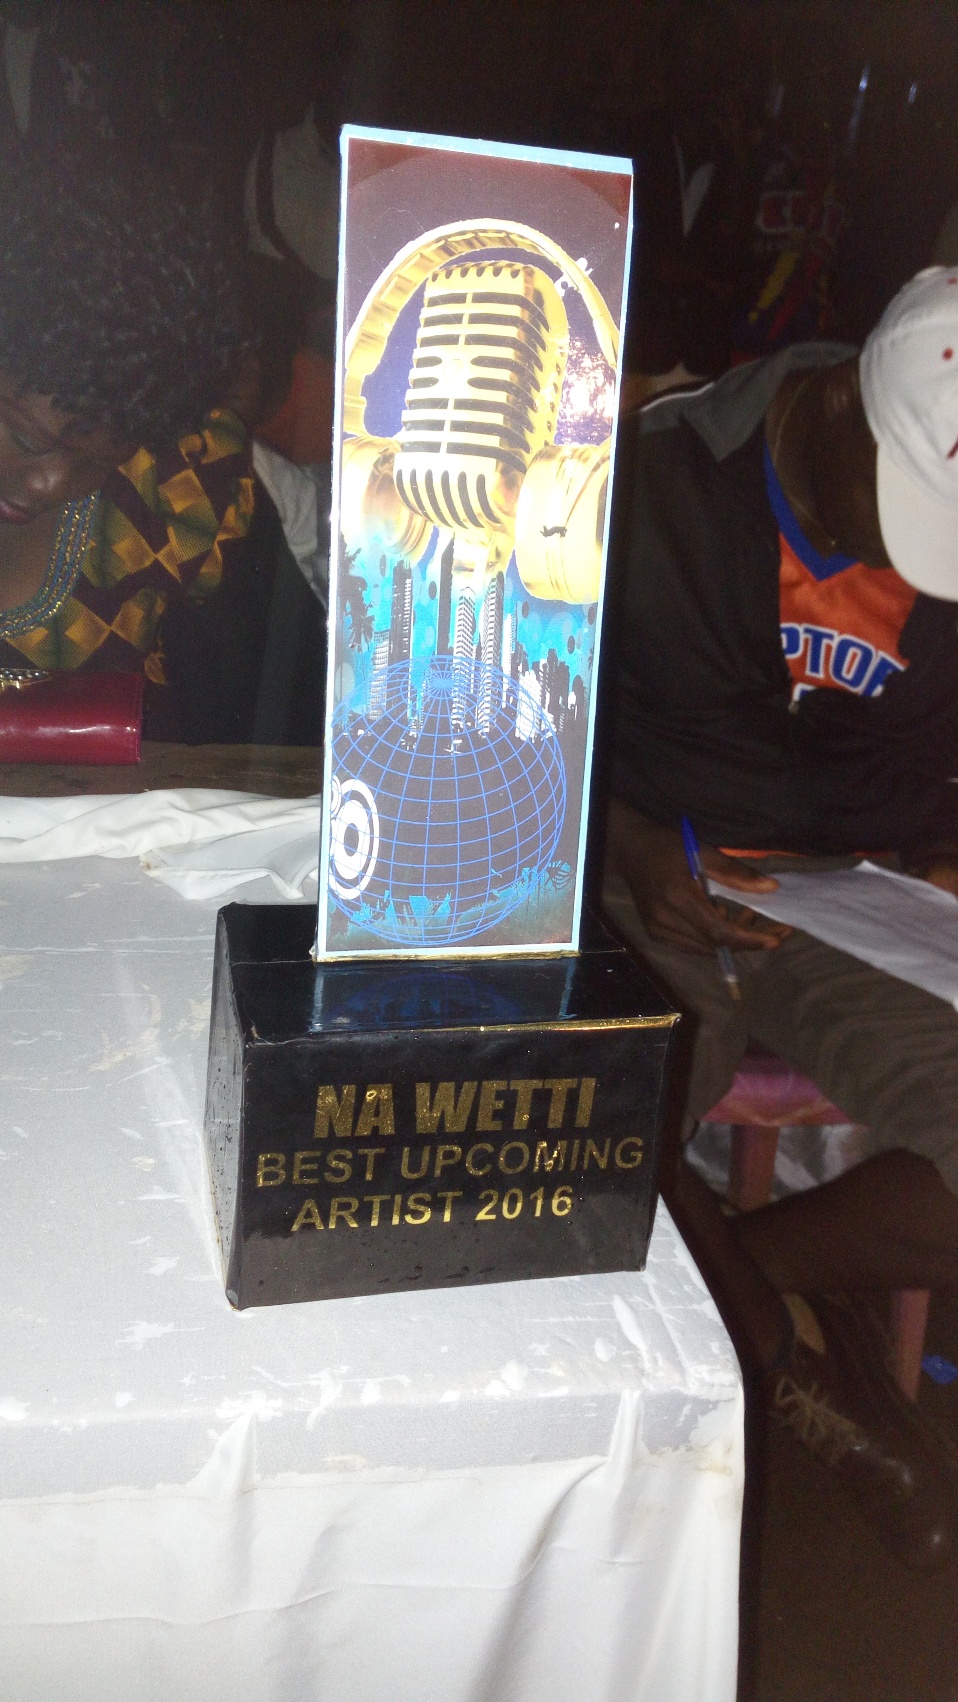 NaWetti Awards 2016